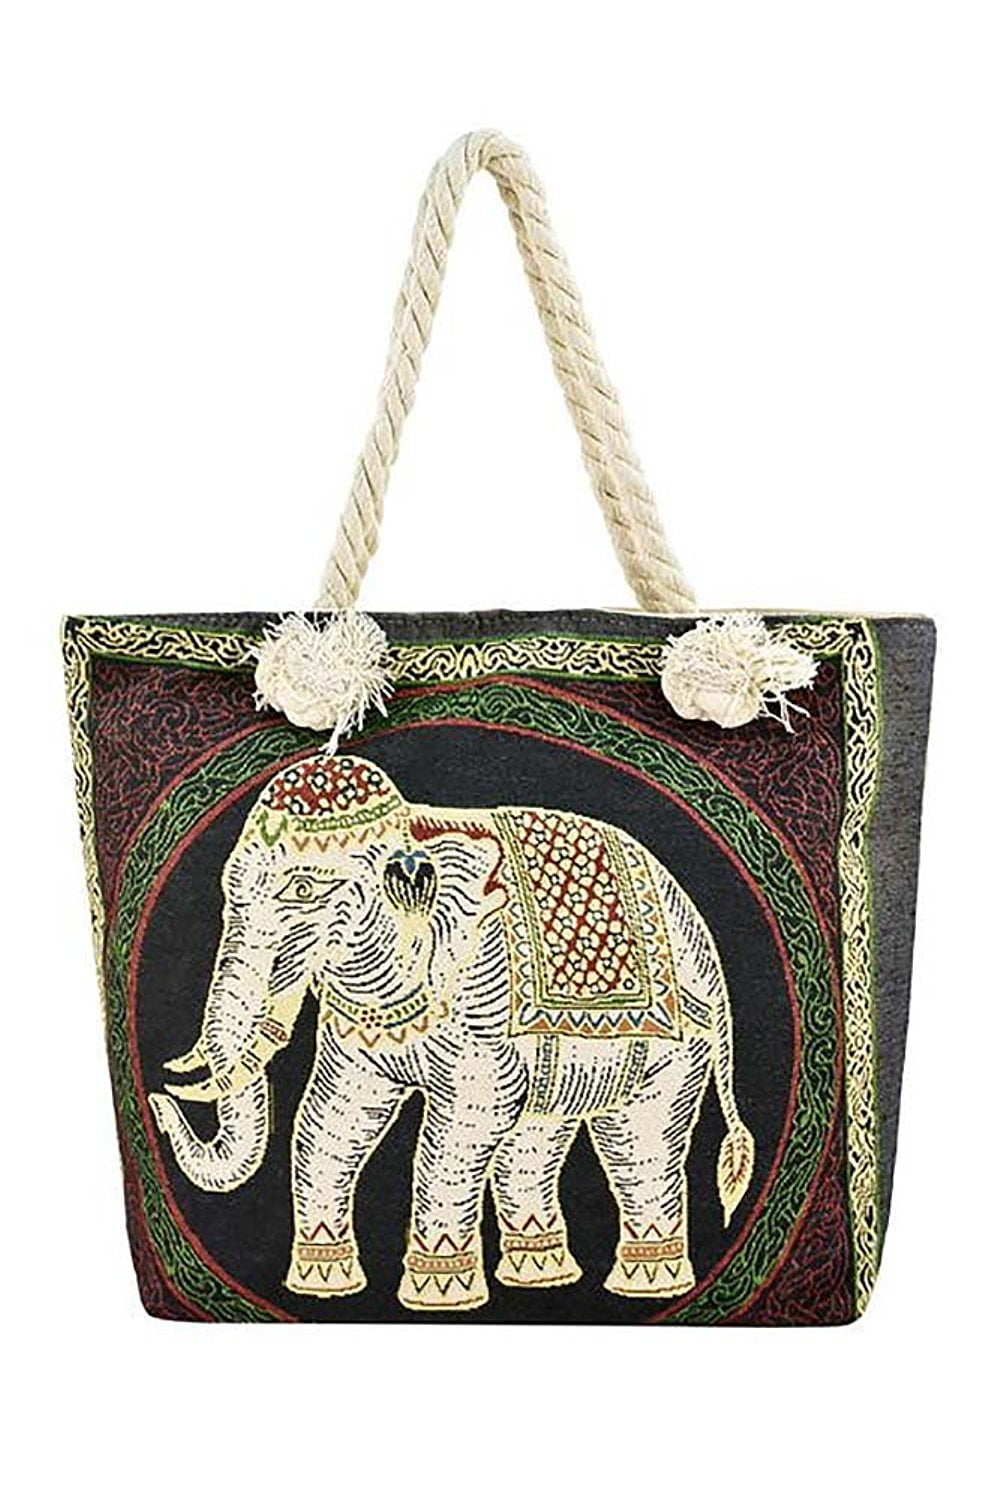 14x16-11 Elephant canvas messenger bag Eastern Elephant Watercolor Style Print with Ethnic Pattern Vintage Style Design canvas beach bag Orange White